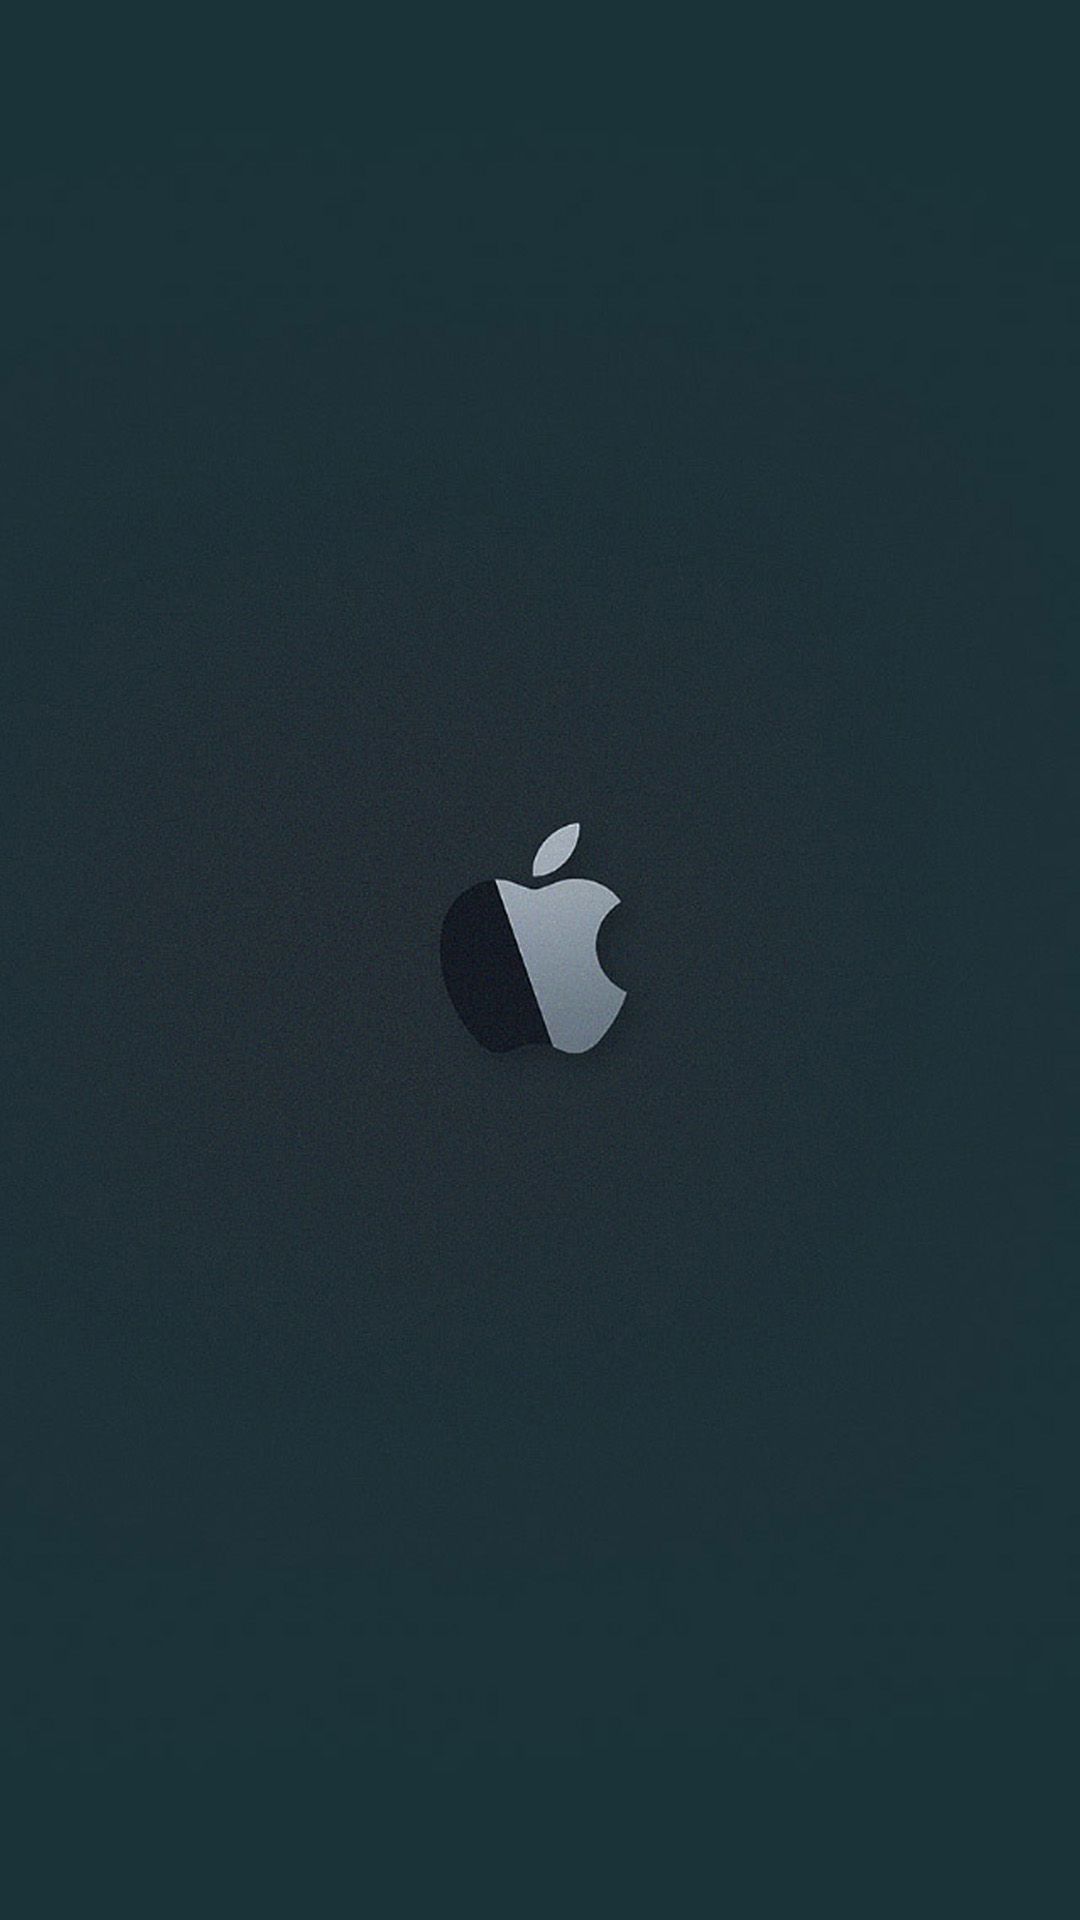 Iphone 6 Apple Wallpaper Black